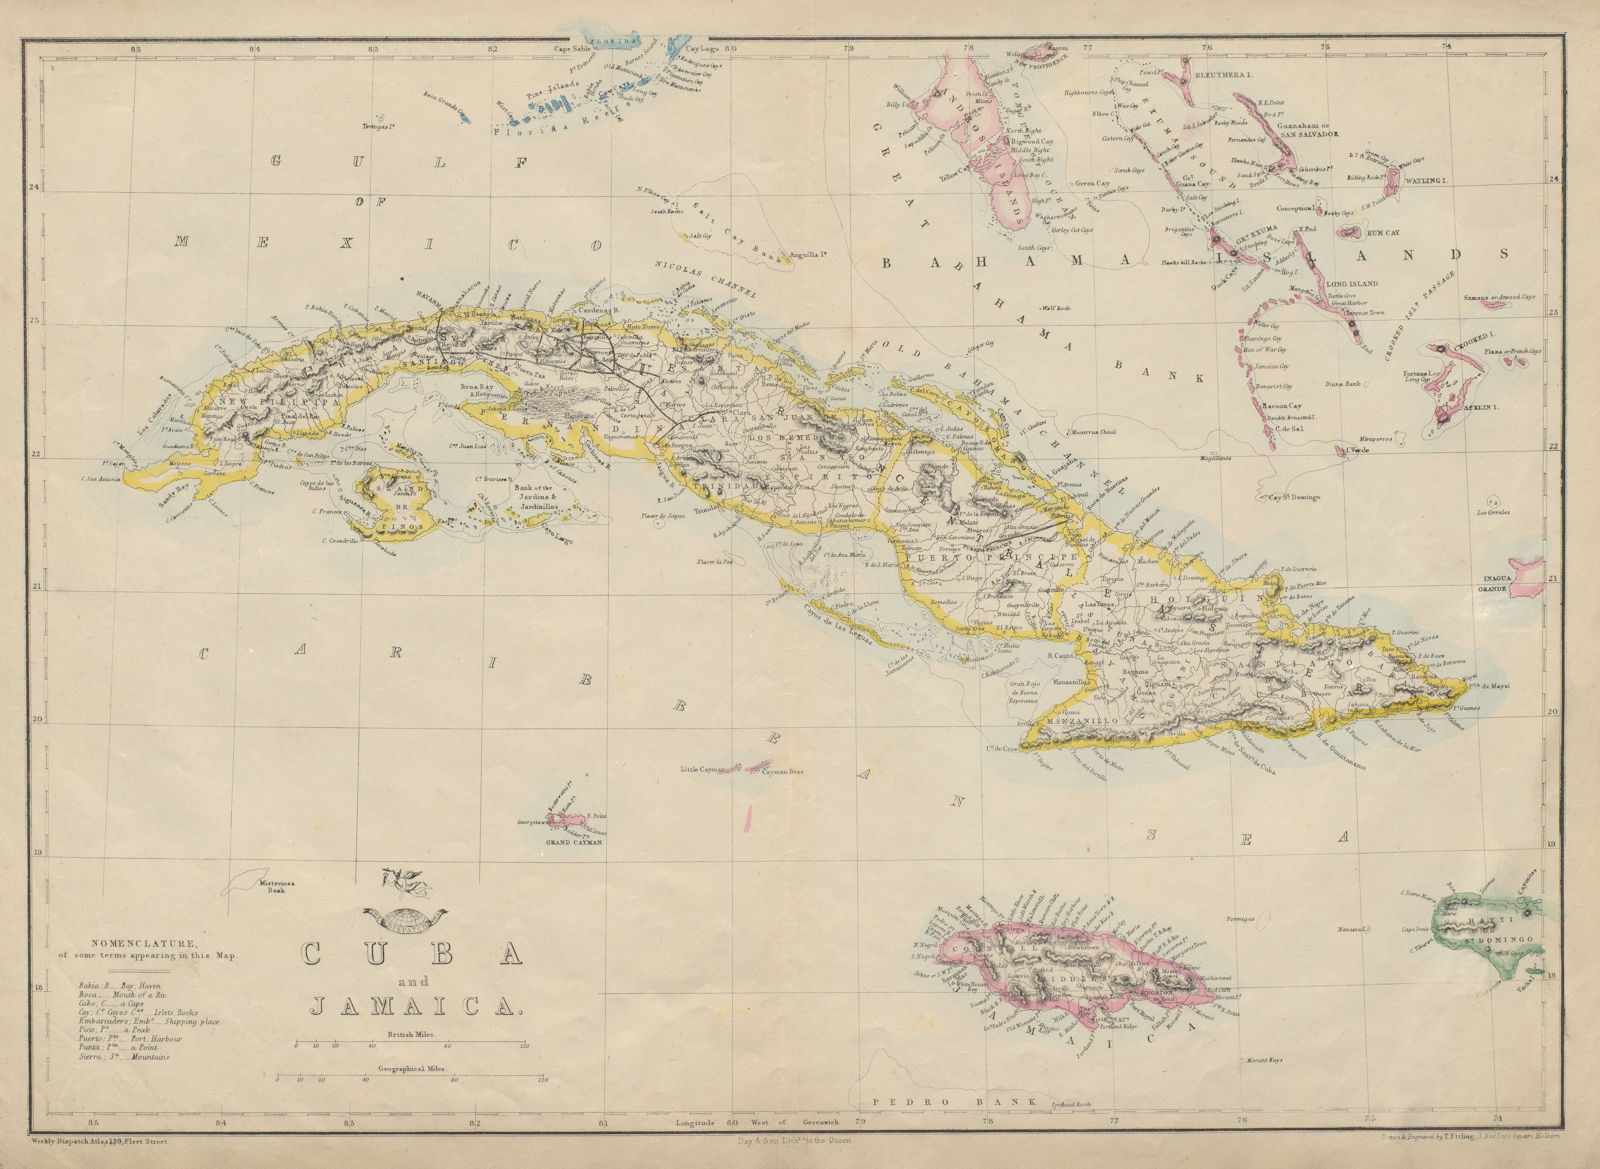 CUBA & JAMAICA. Bahamas, Cayman Islands & Florida Keys. ETTLING 1863 old map